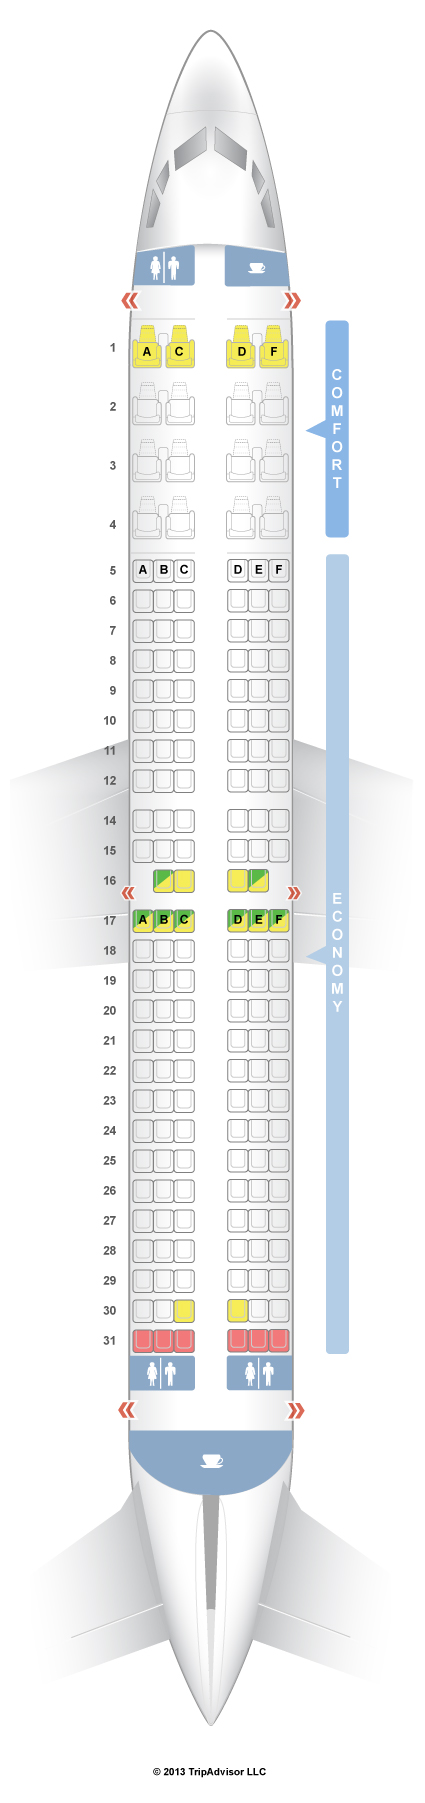 737 900 Seating Chart